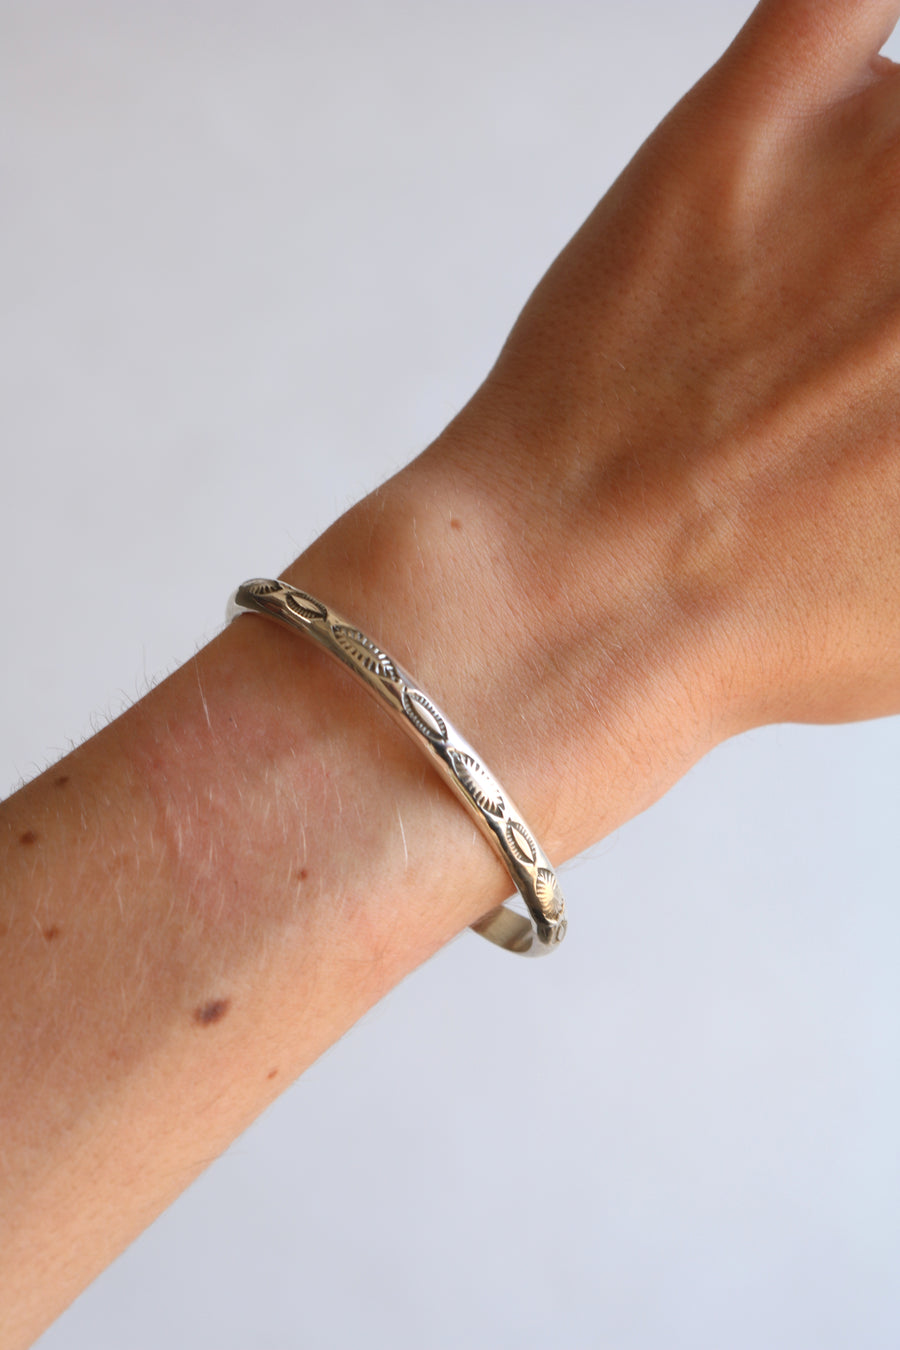 Ida McCrae // Stamped Sterling Silver Bracelet